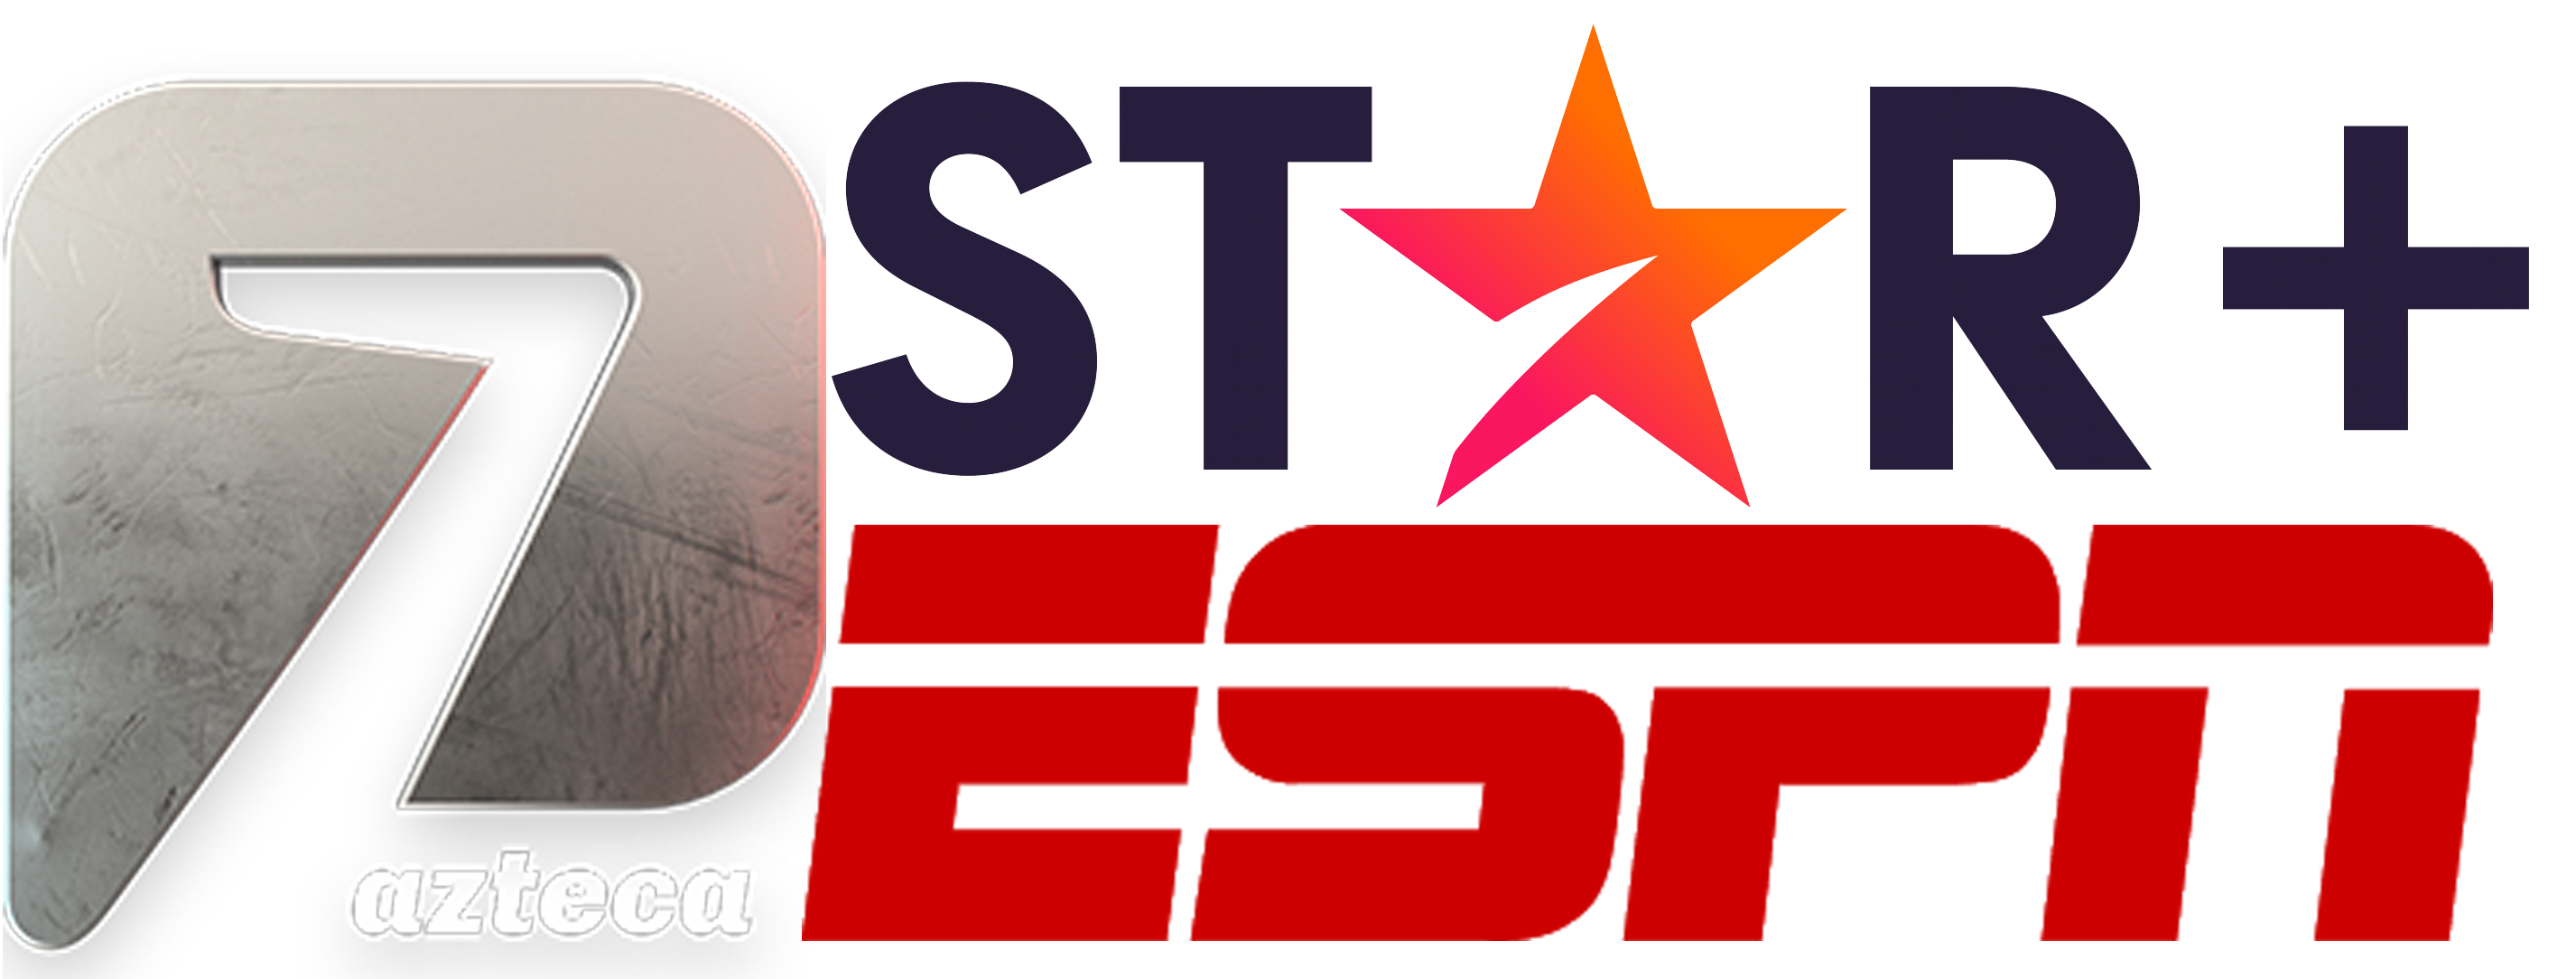 Azteca 7 | ESPN | STAR+